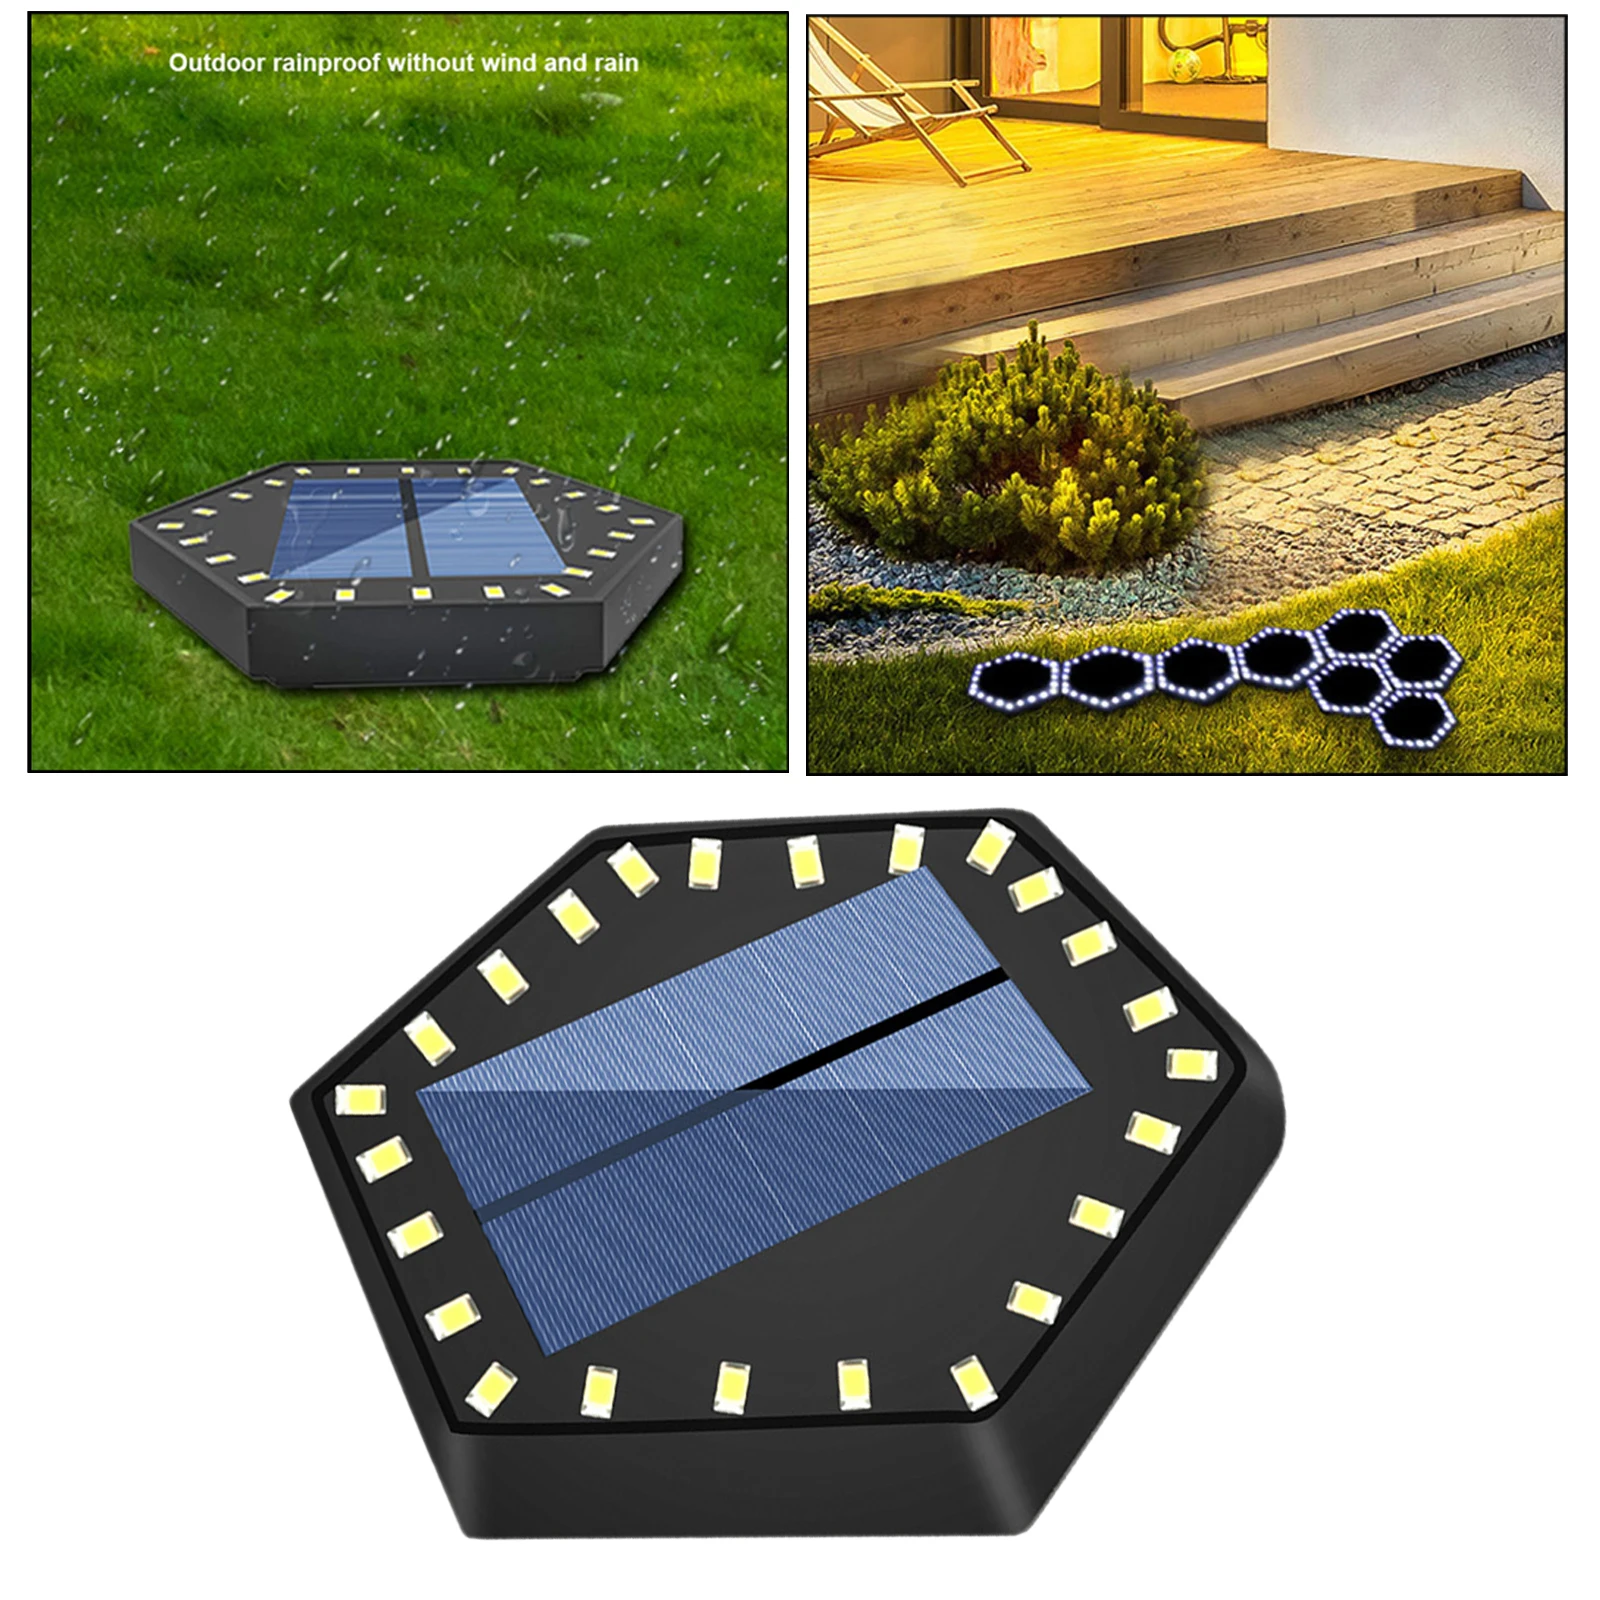 Outdoors Hexagonal LED Solar Powered Garden Ground Light Lighting Waterproof